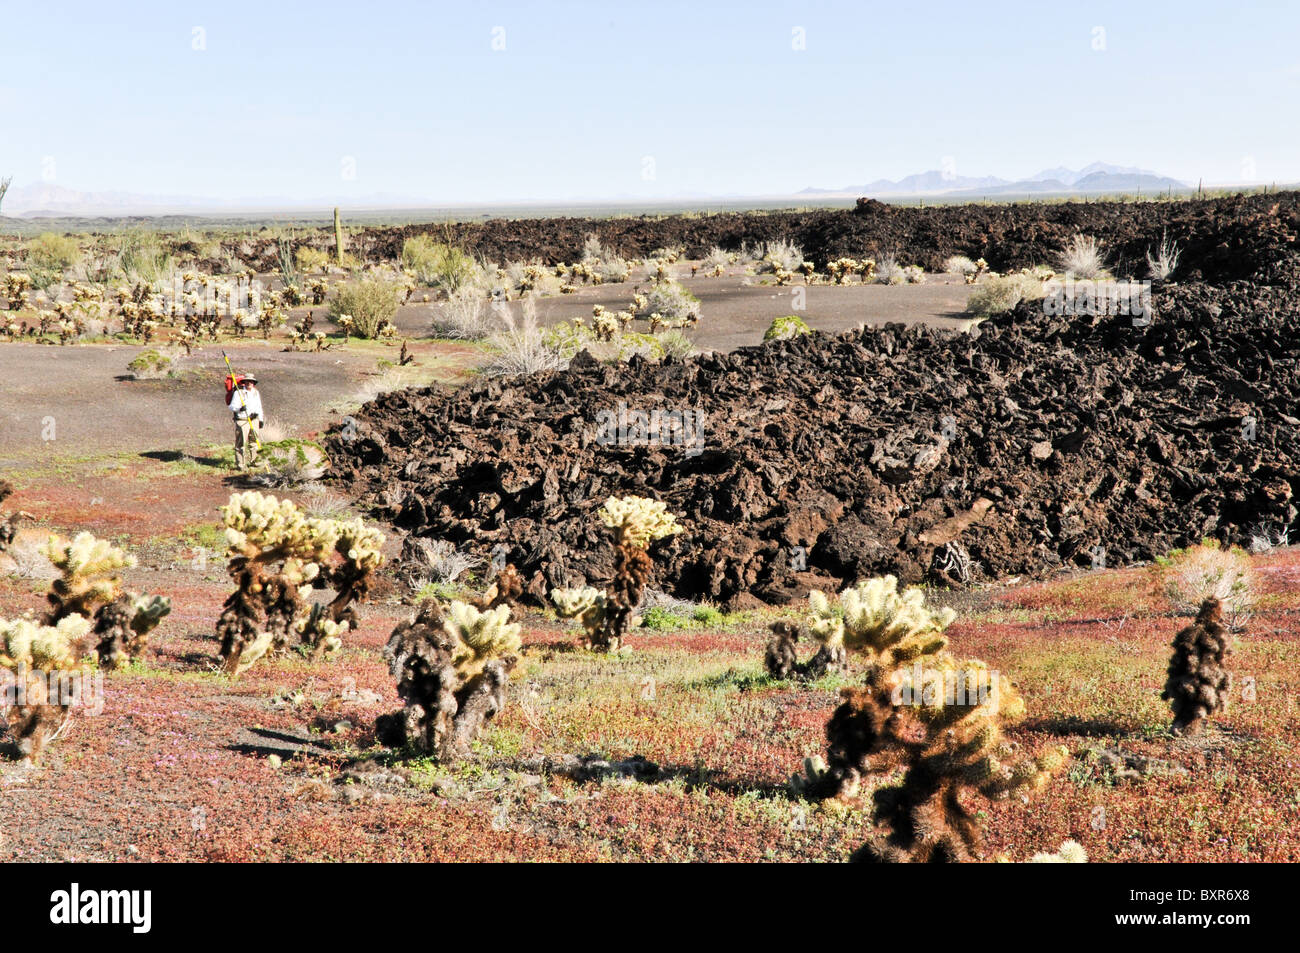 Geologist viewing lava flow near El Tecolote Cinder Cone, El Pinacate Biosphere Reserve, Sonora, Mexico Stock Photo